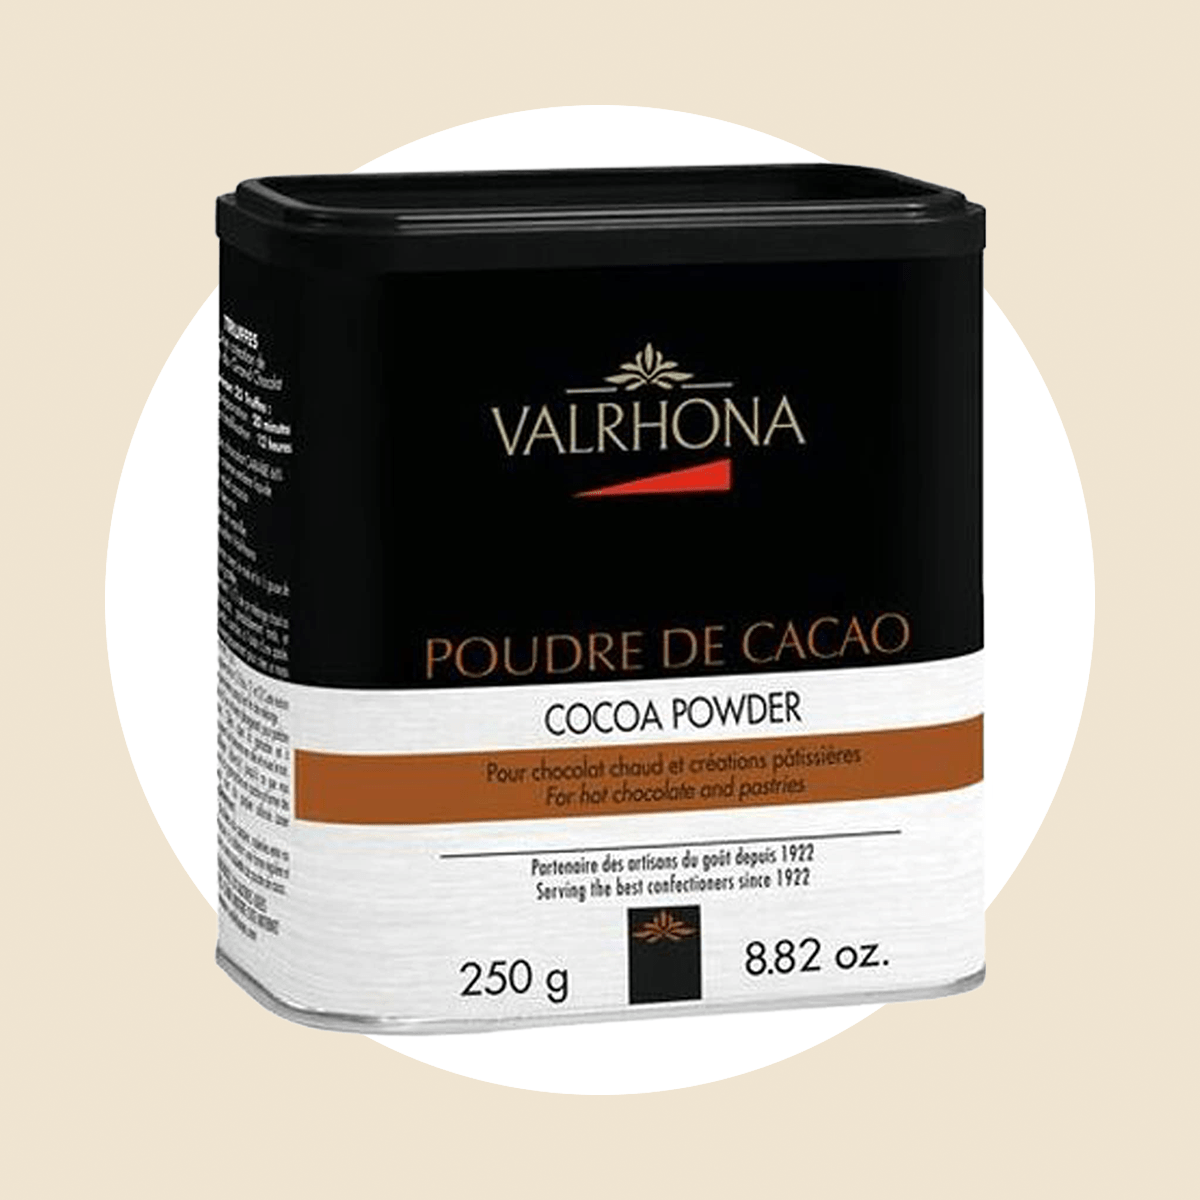 Valrhona Pure Cocoa Powder Ecomm Via Amazon.com